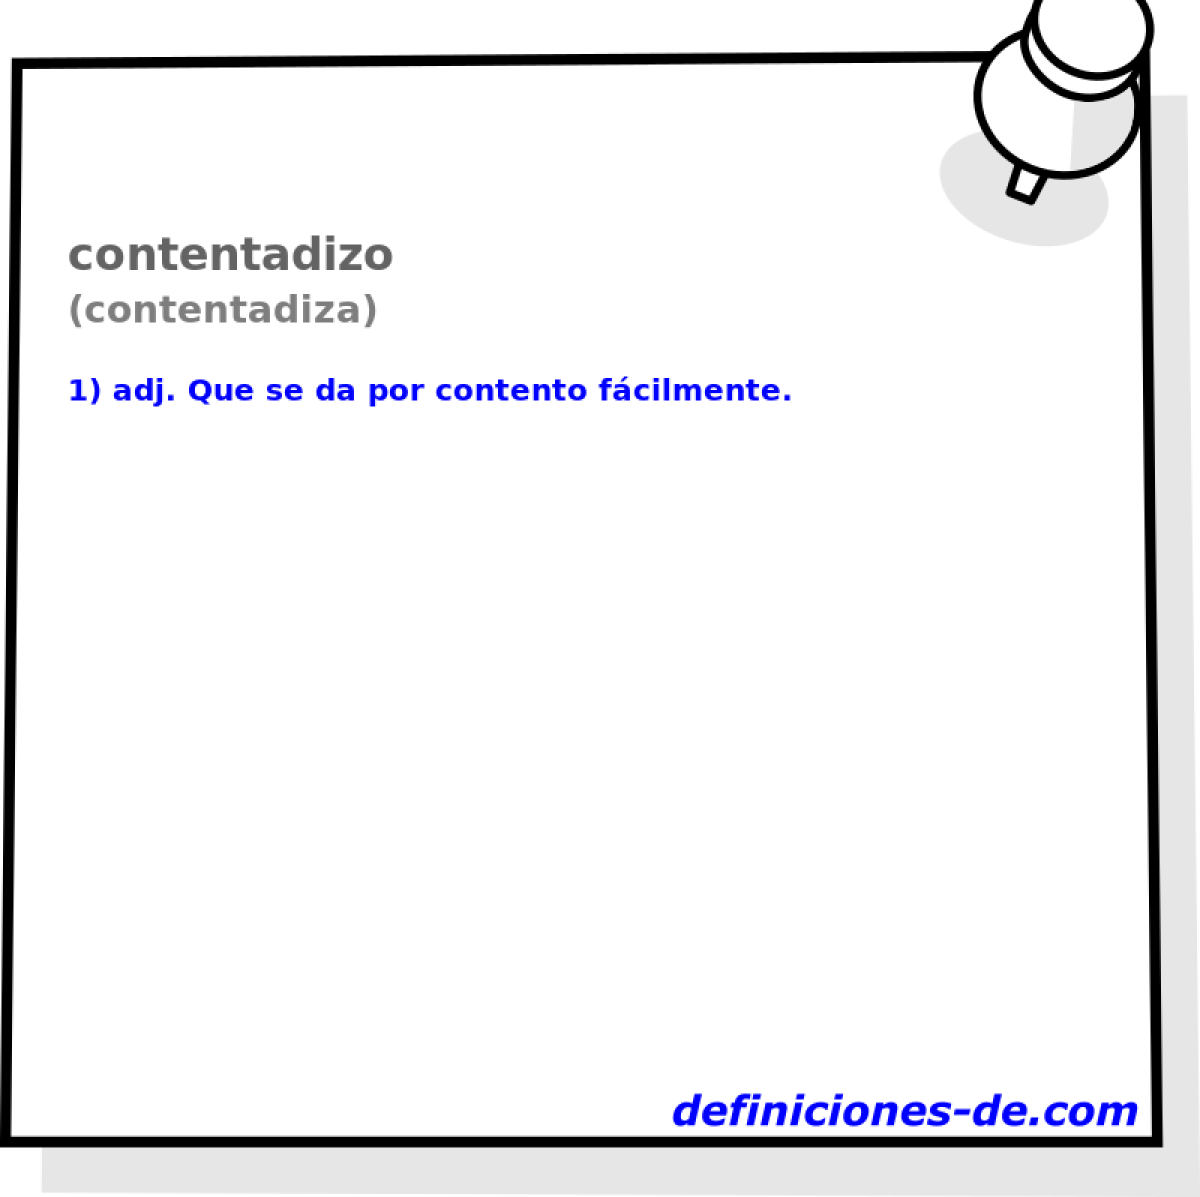 contentadizo (contentadiza)